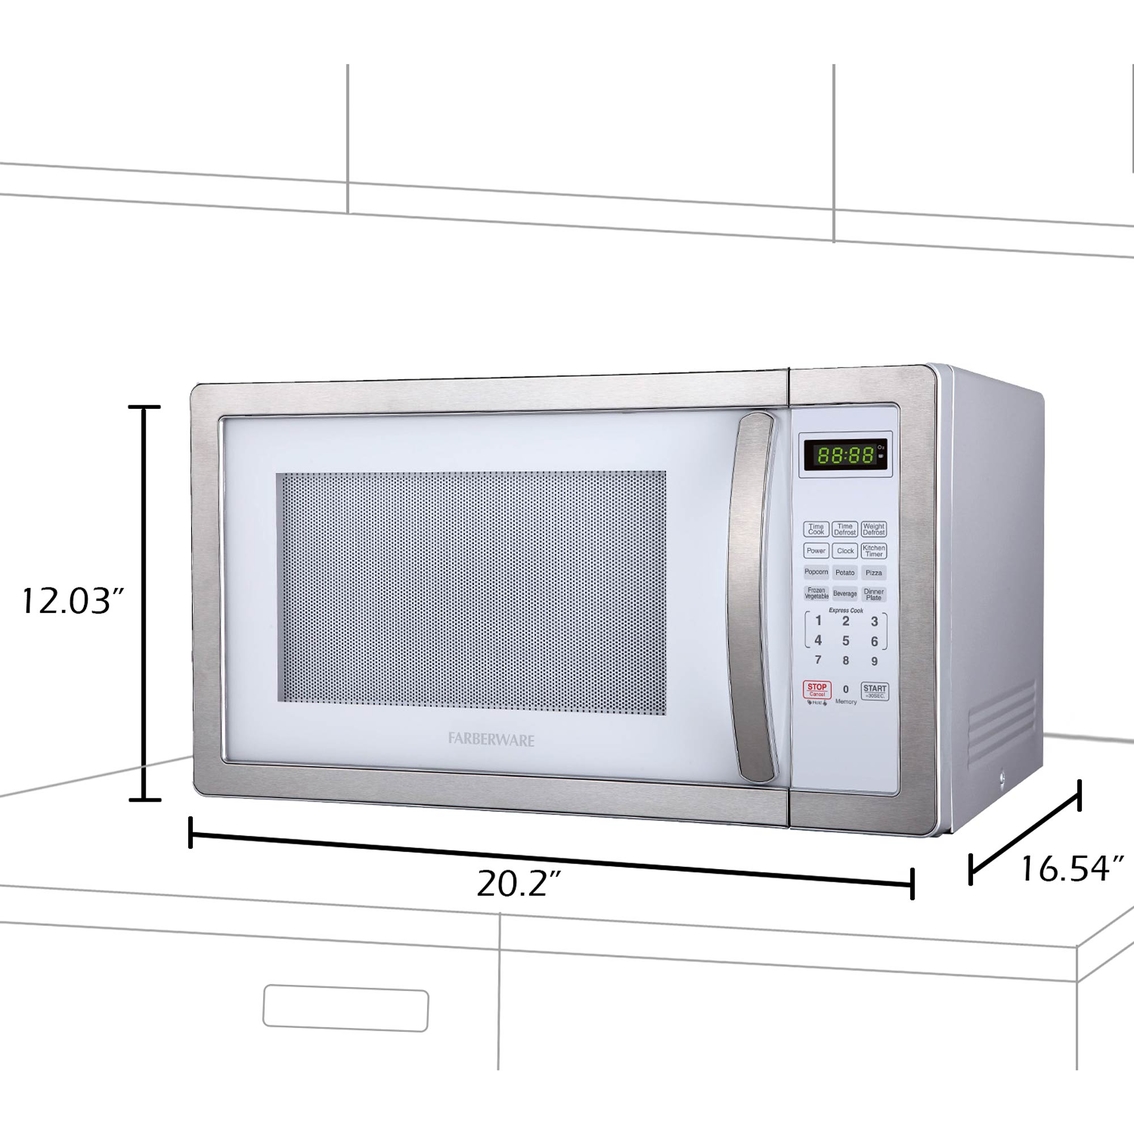 Farberware Classic 1.1 cu. ft. 1000 Watt Microwave Oven - Image 7 of 8